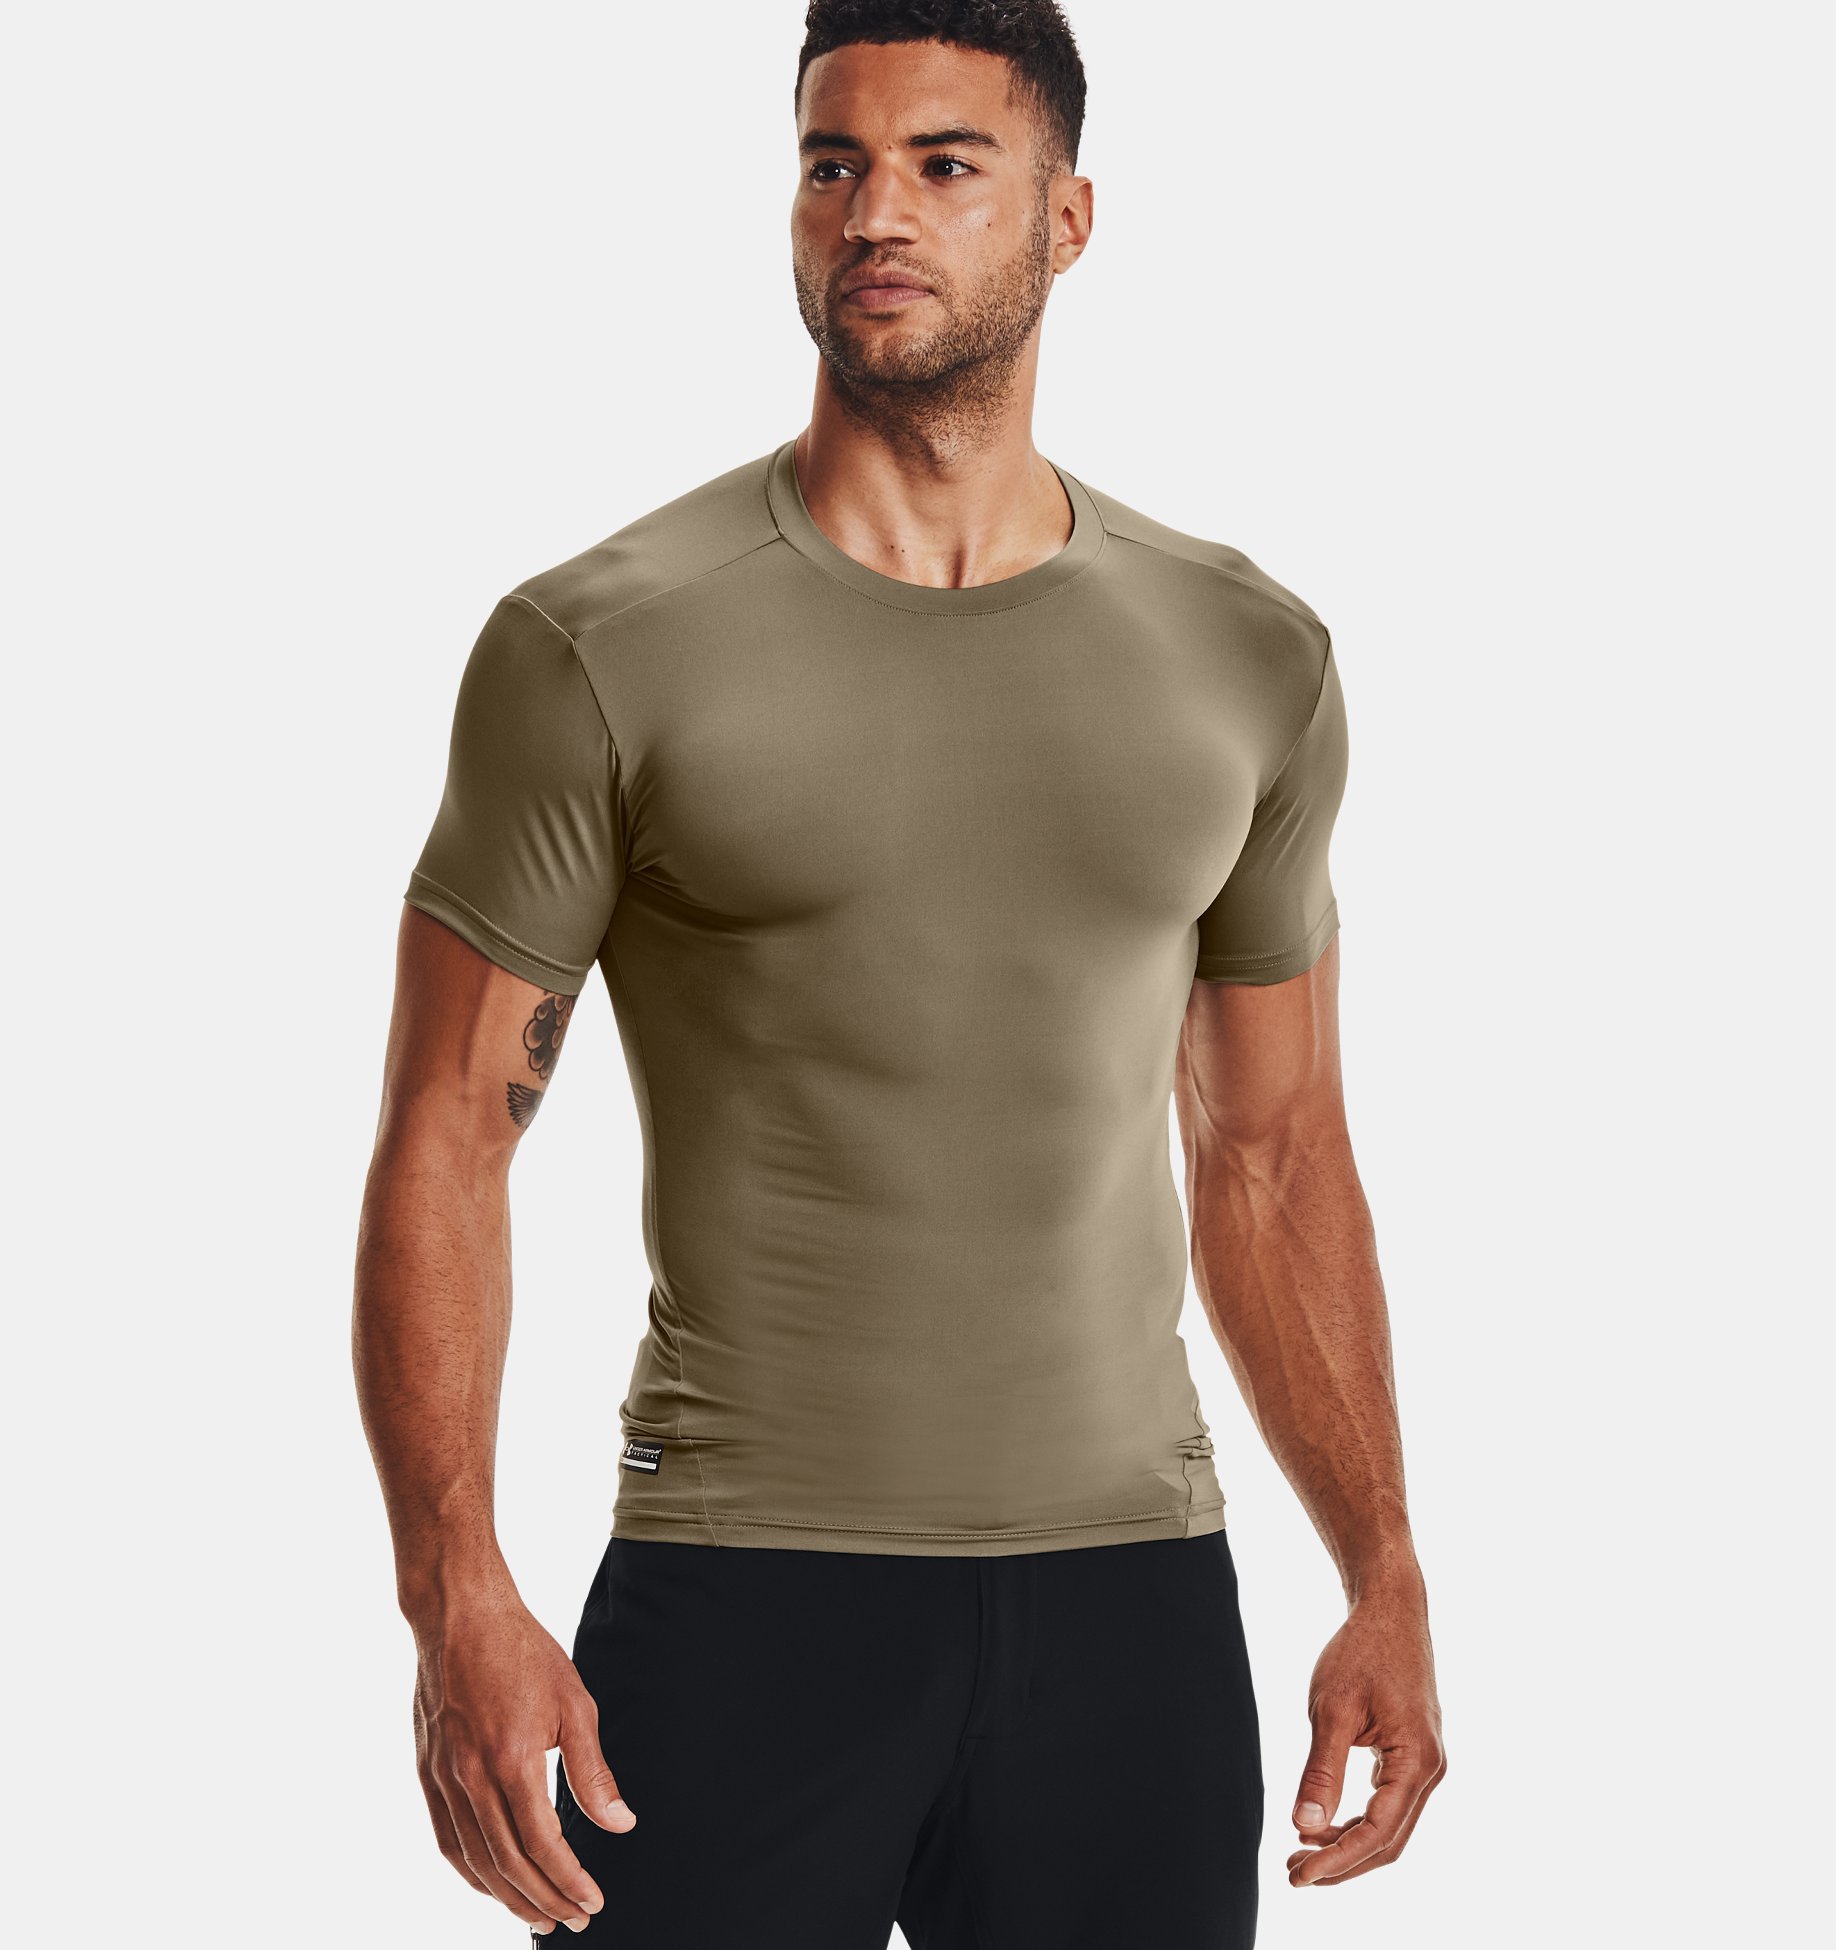 Energizar motor tengo sueño Men's Tactical HeatGear® Compression Short Sleeve T-Shirt | Under Armour